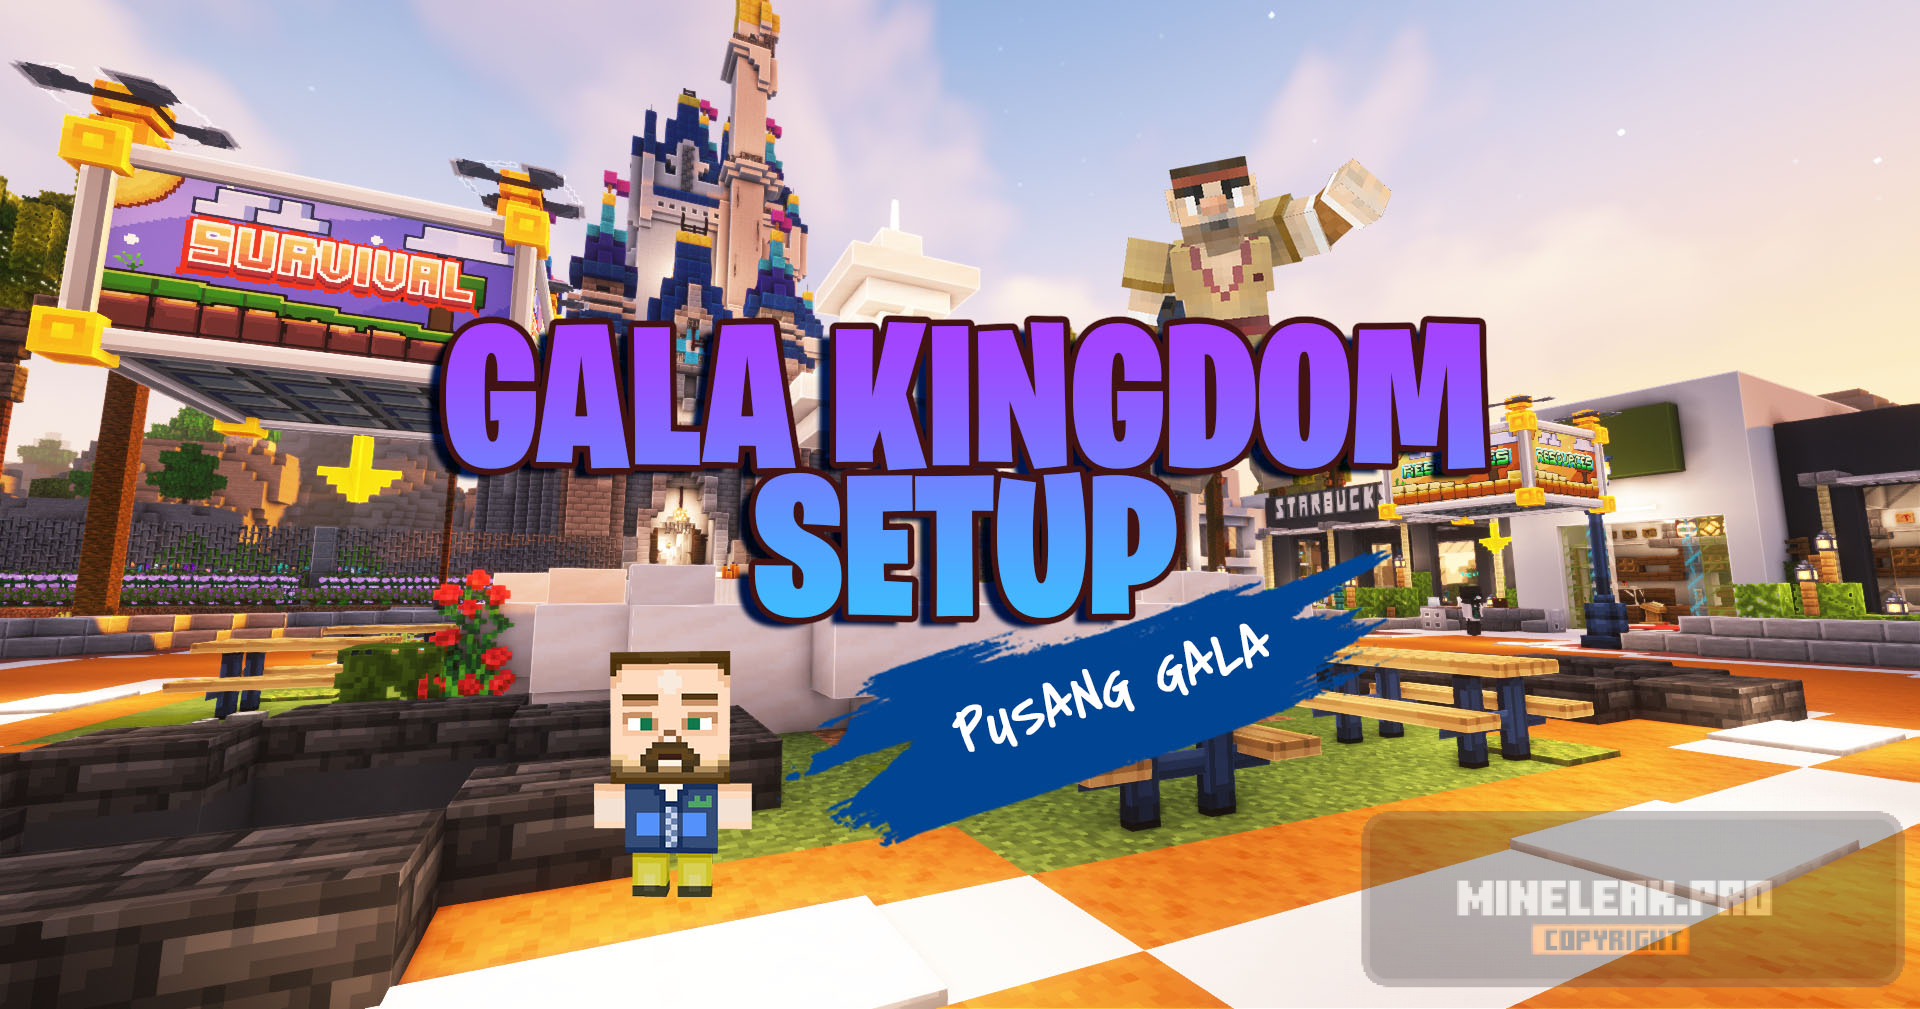 Gala_Kingdom_Setup.jpg